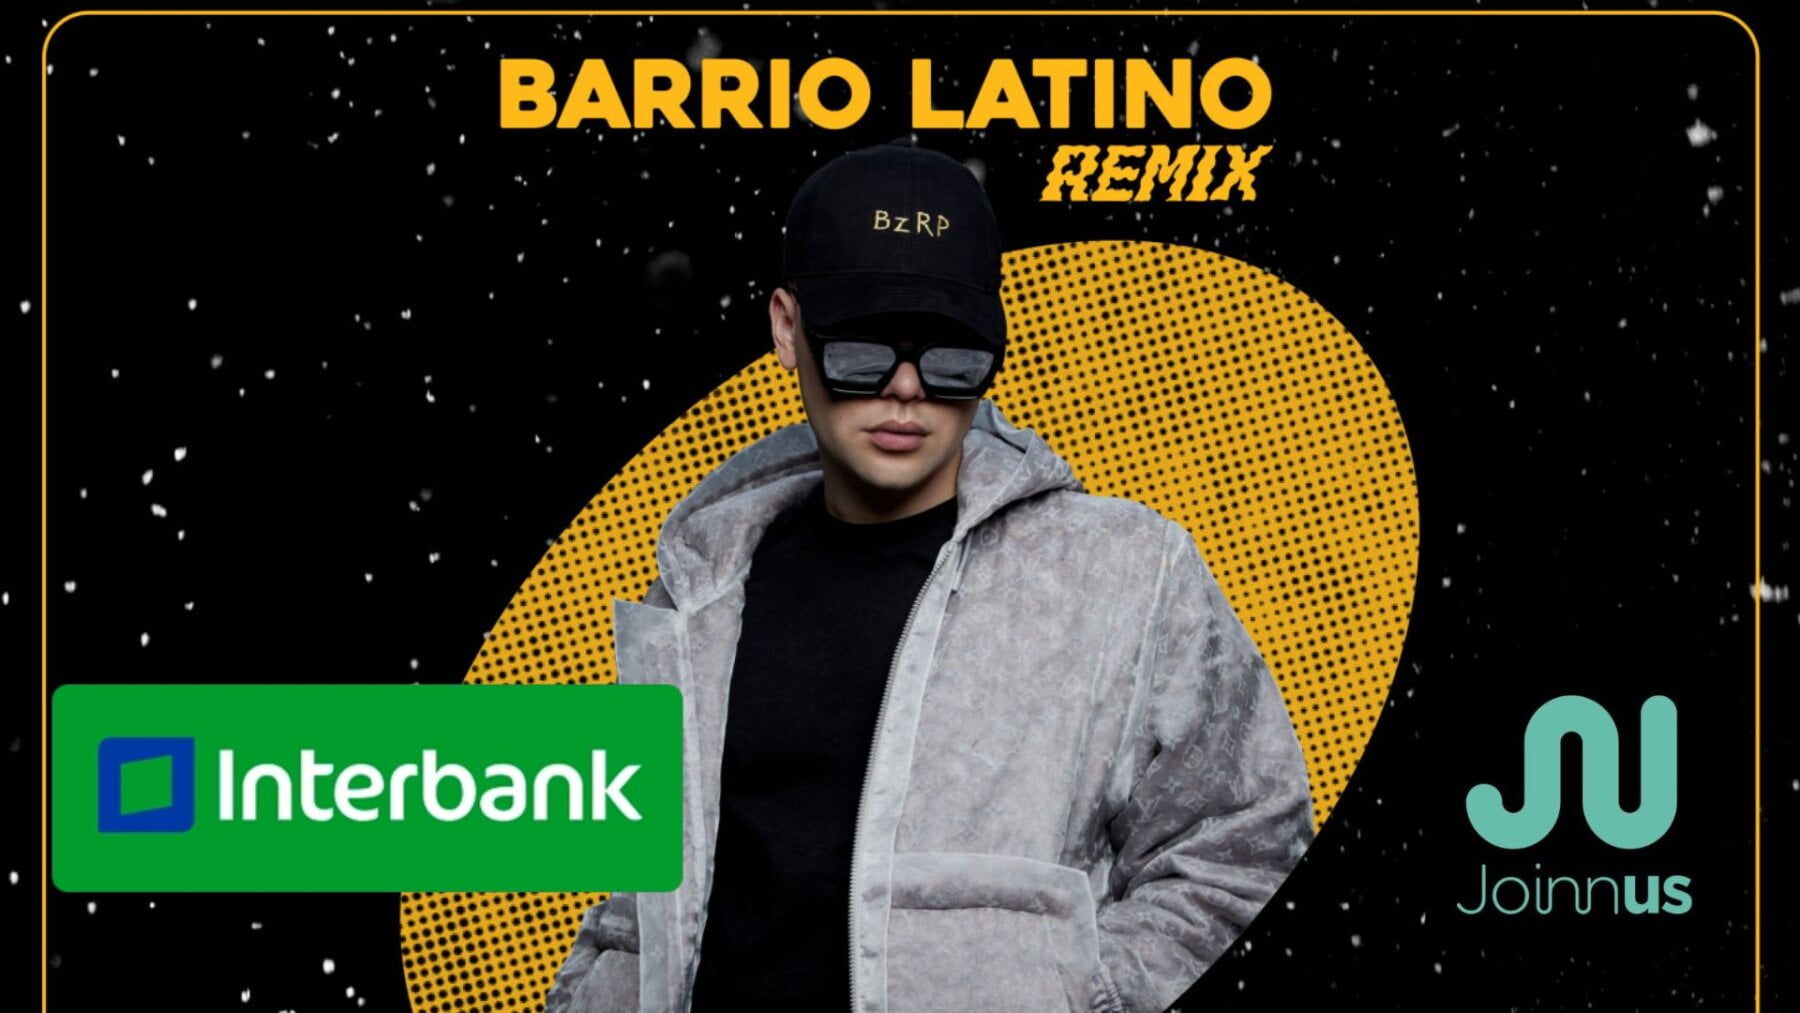 Entradas Festival Barrio Latino Remix Preventa Interbank JOINNUS LINK